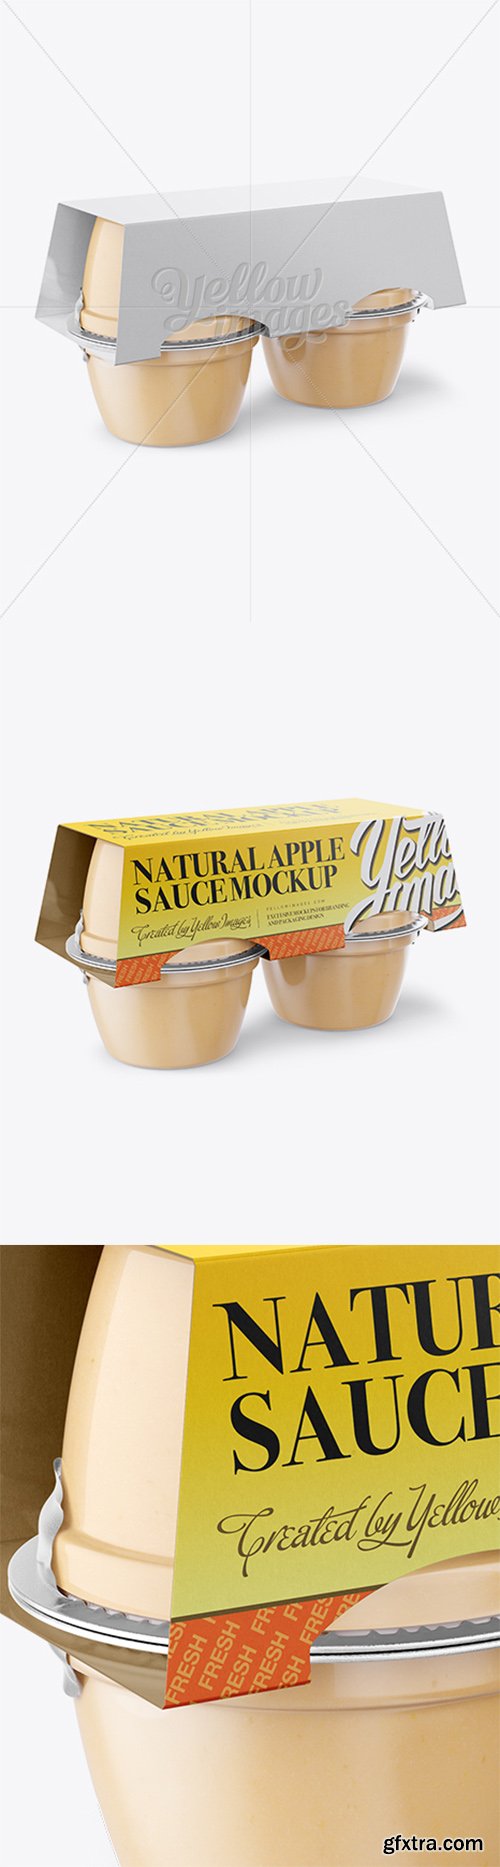 Natural Apple Sauce 4-4 Oz. Cups Mockup - Halfside View 13953